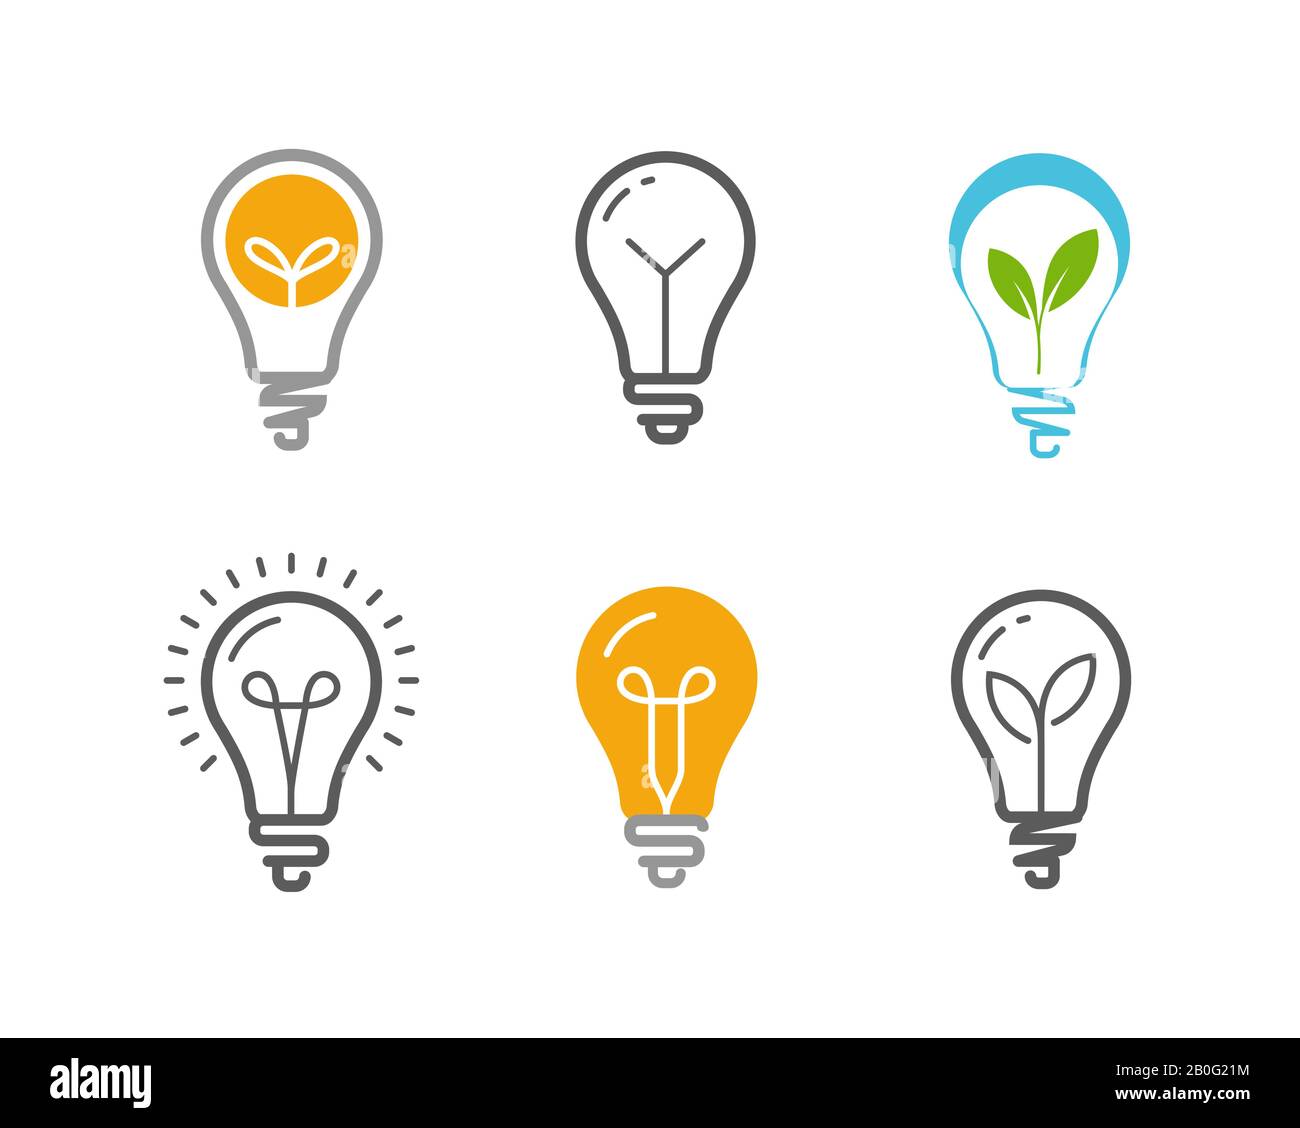 Light bulb icon set. Technology, idea symbol or logo. Vector illustration Stock Vector